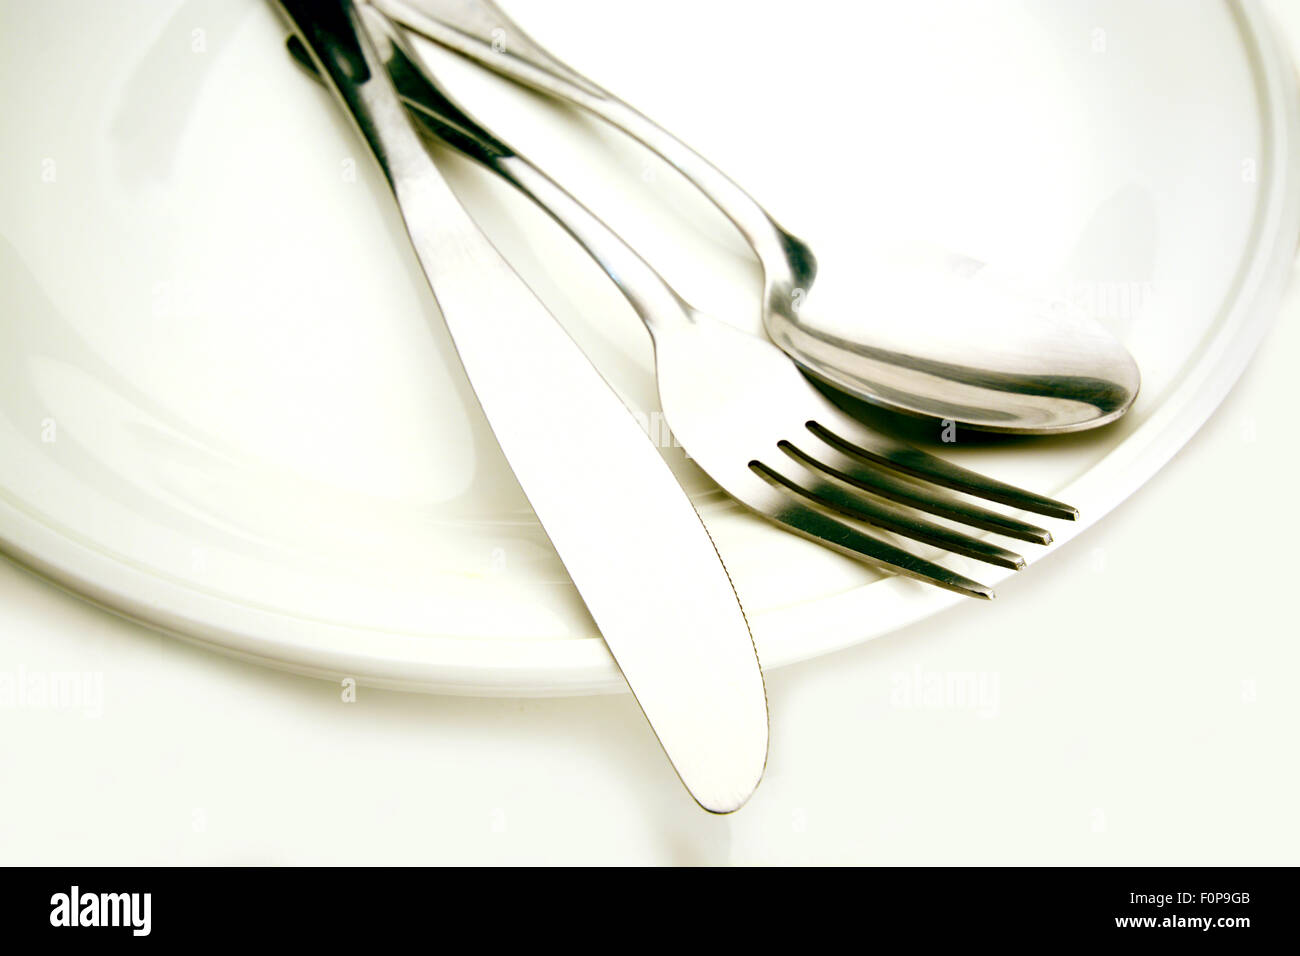 Macro shot of silverware over a white plate Stock Photo